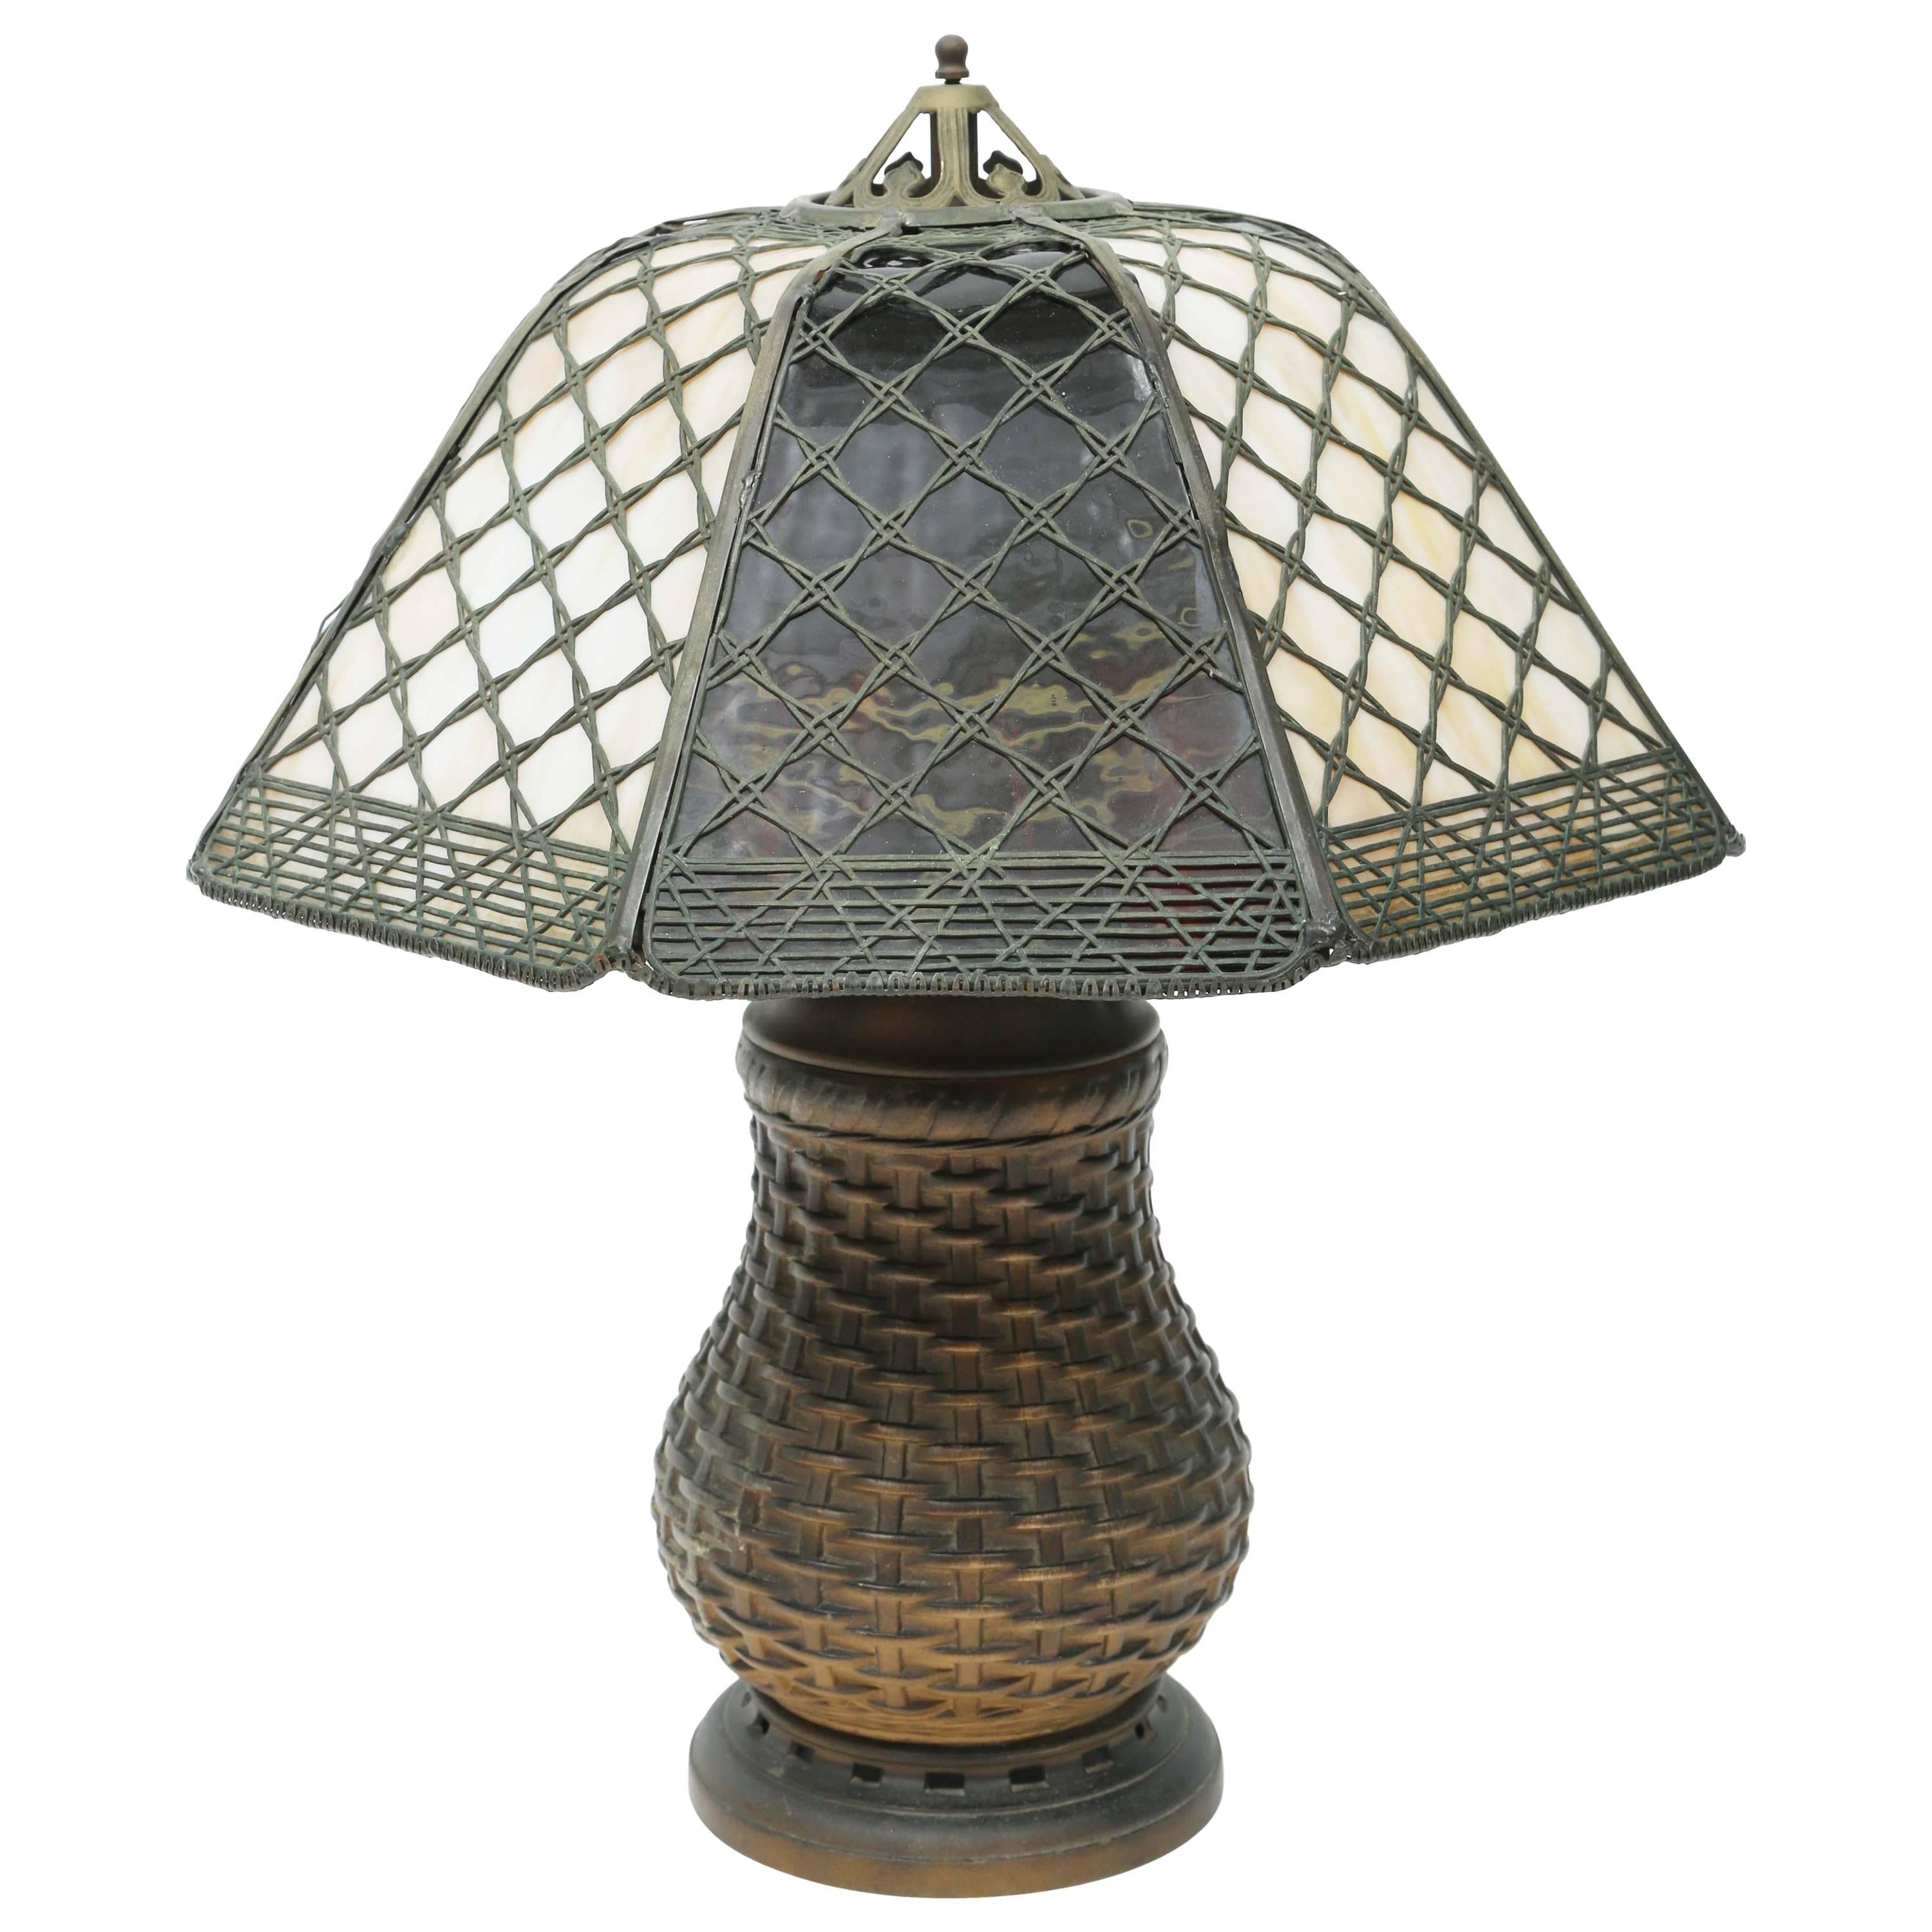 Handel Basket-Weave Panel Lamp